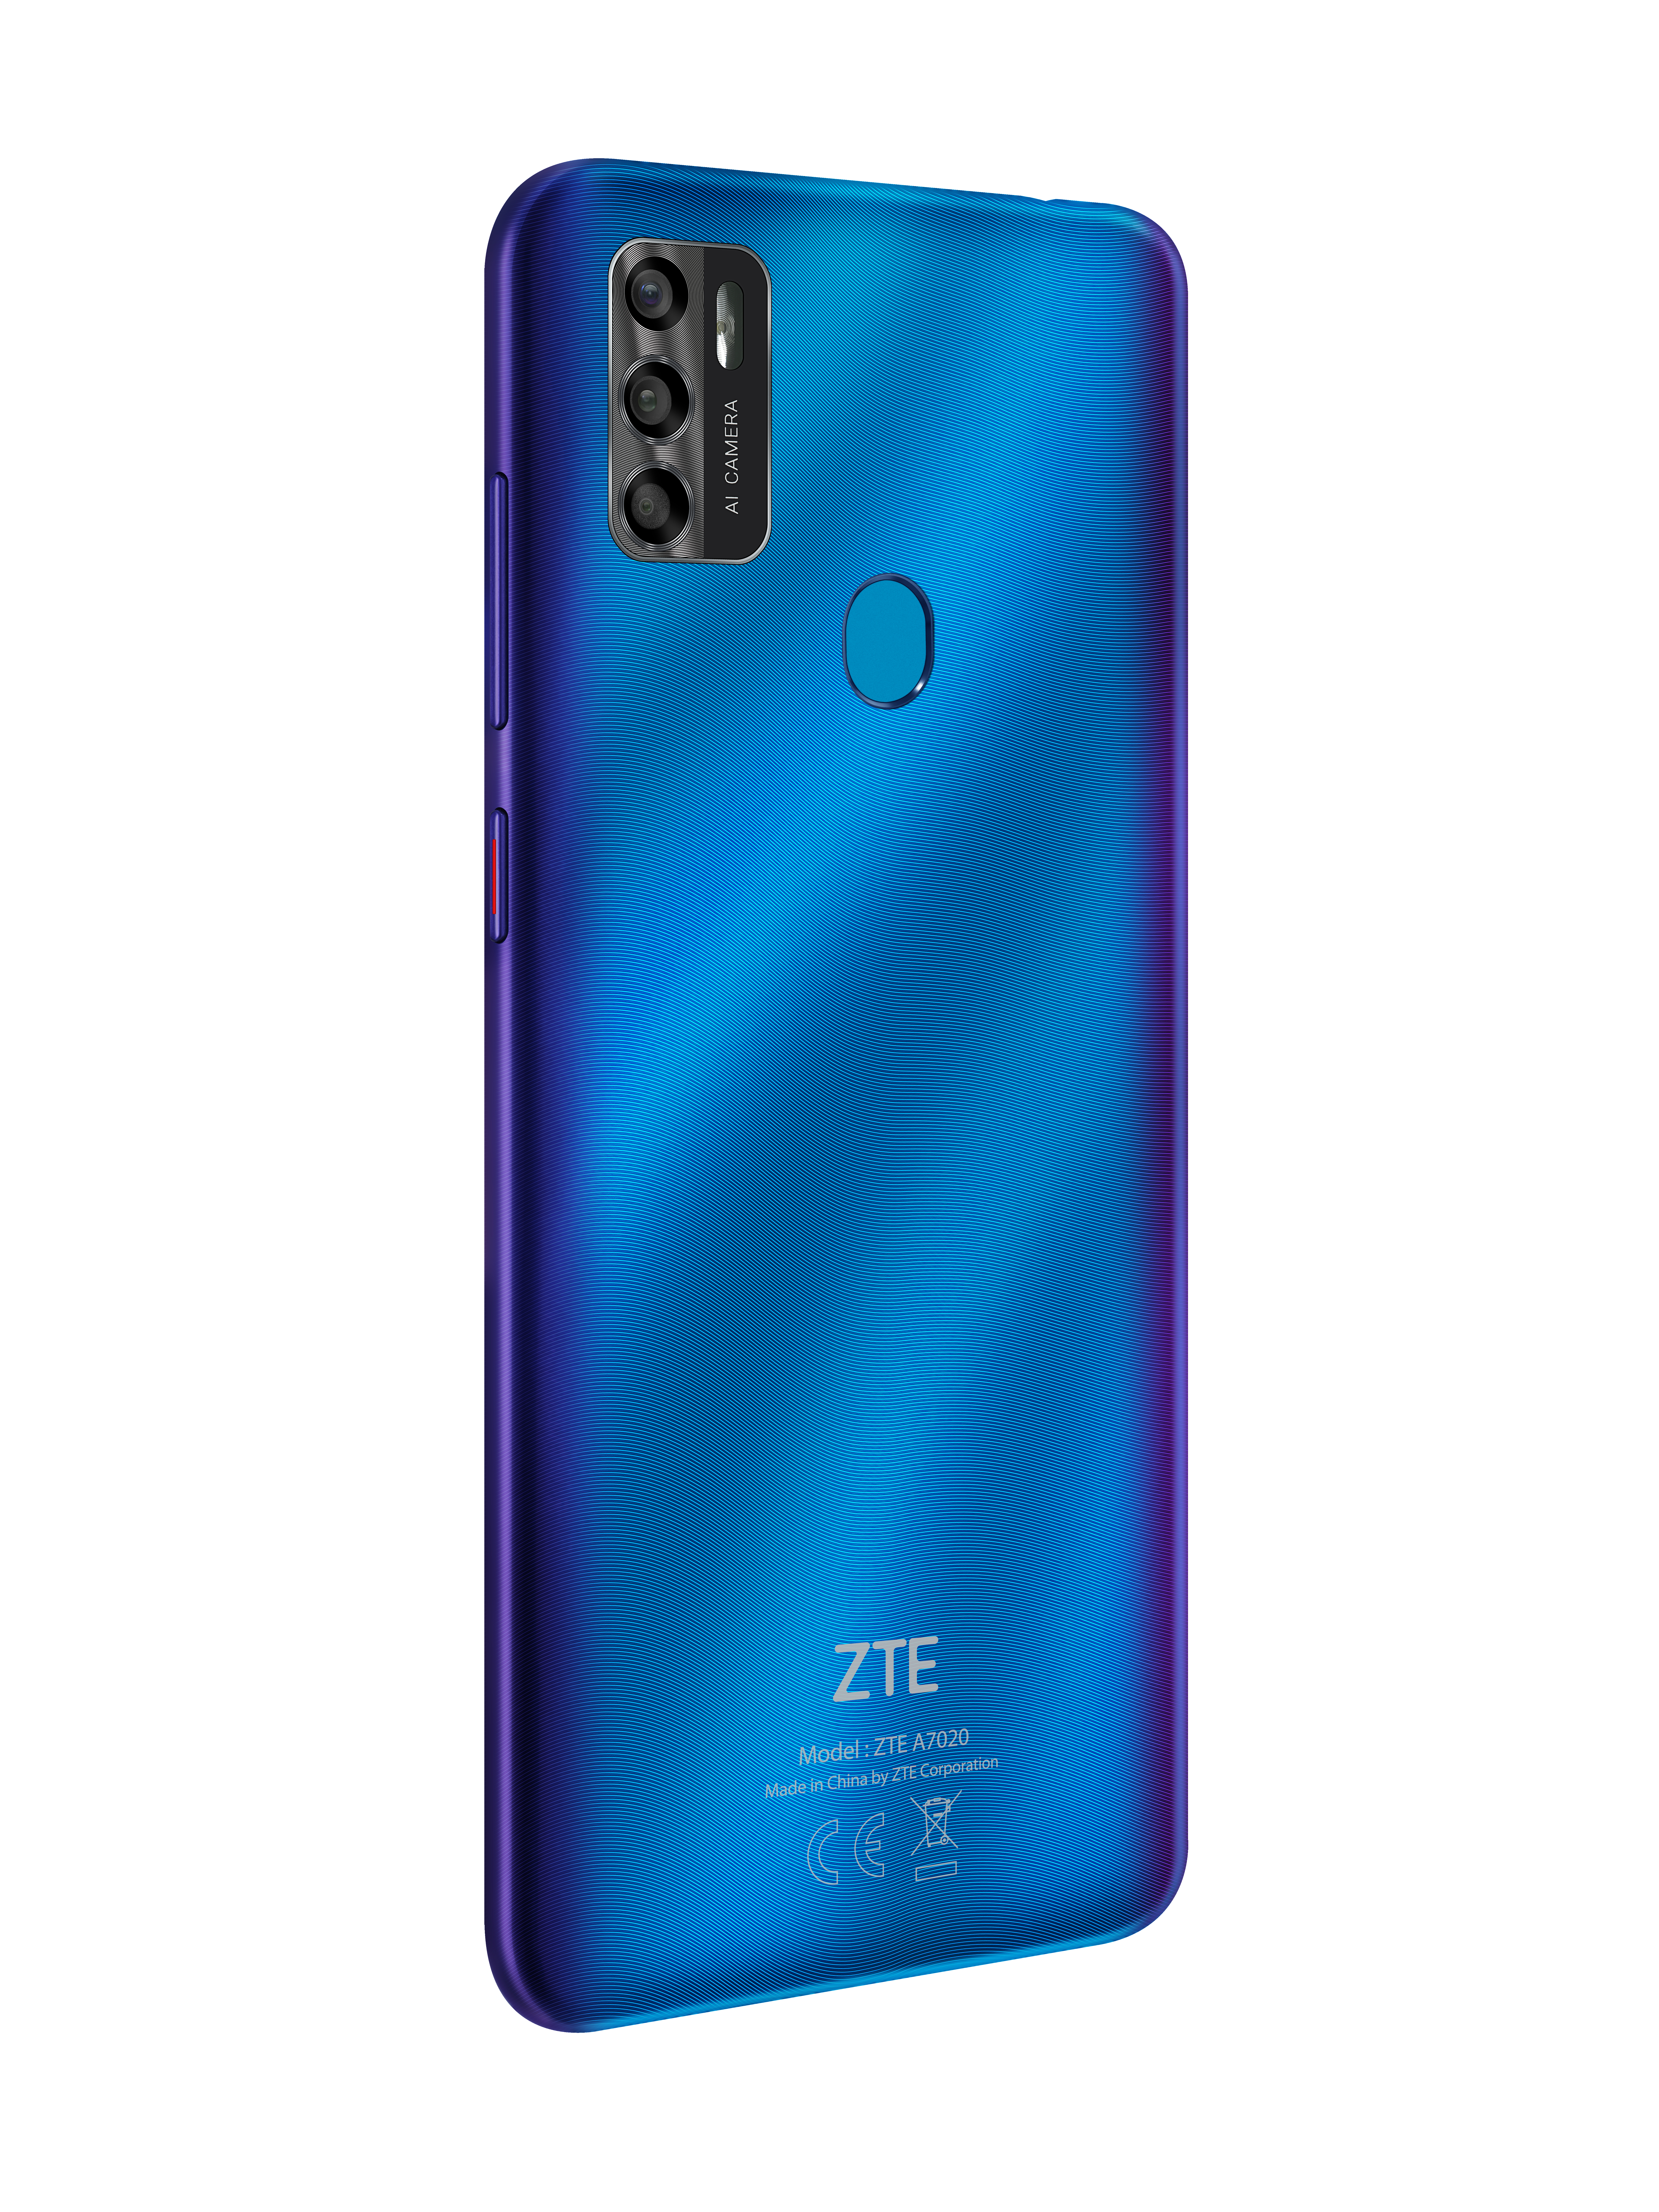 GB Dual 64 Blau A7s ZTE 2020 SIM